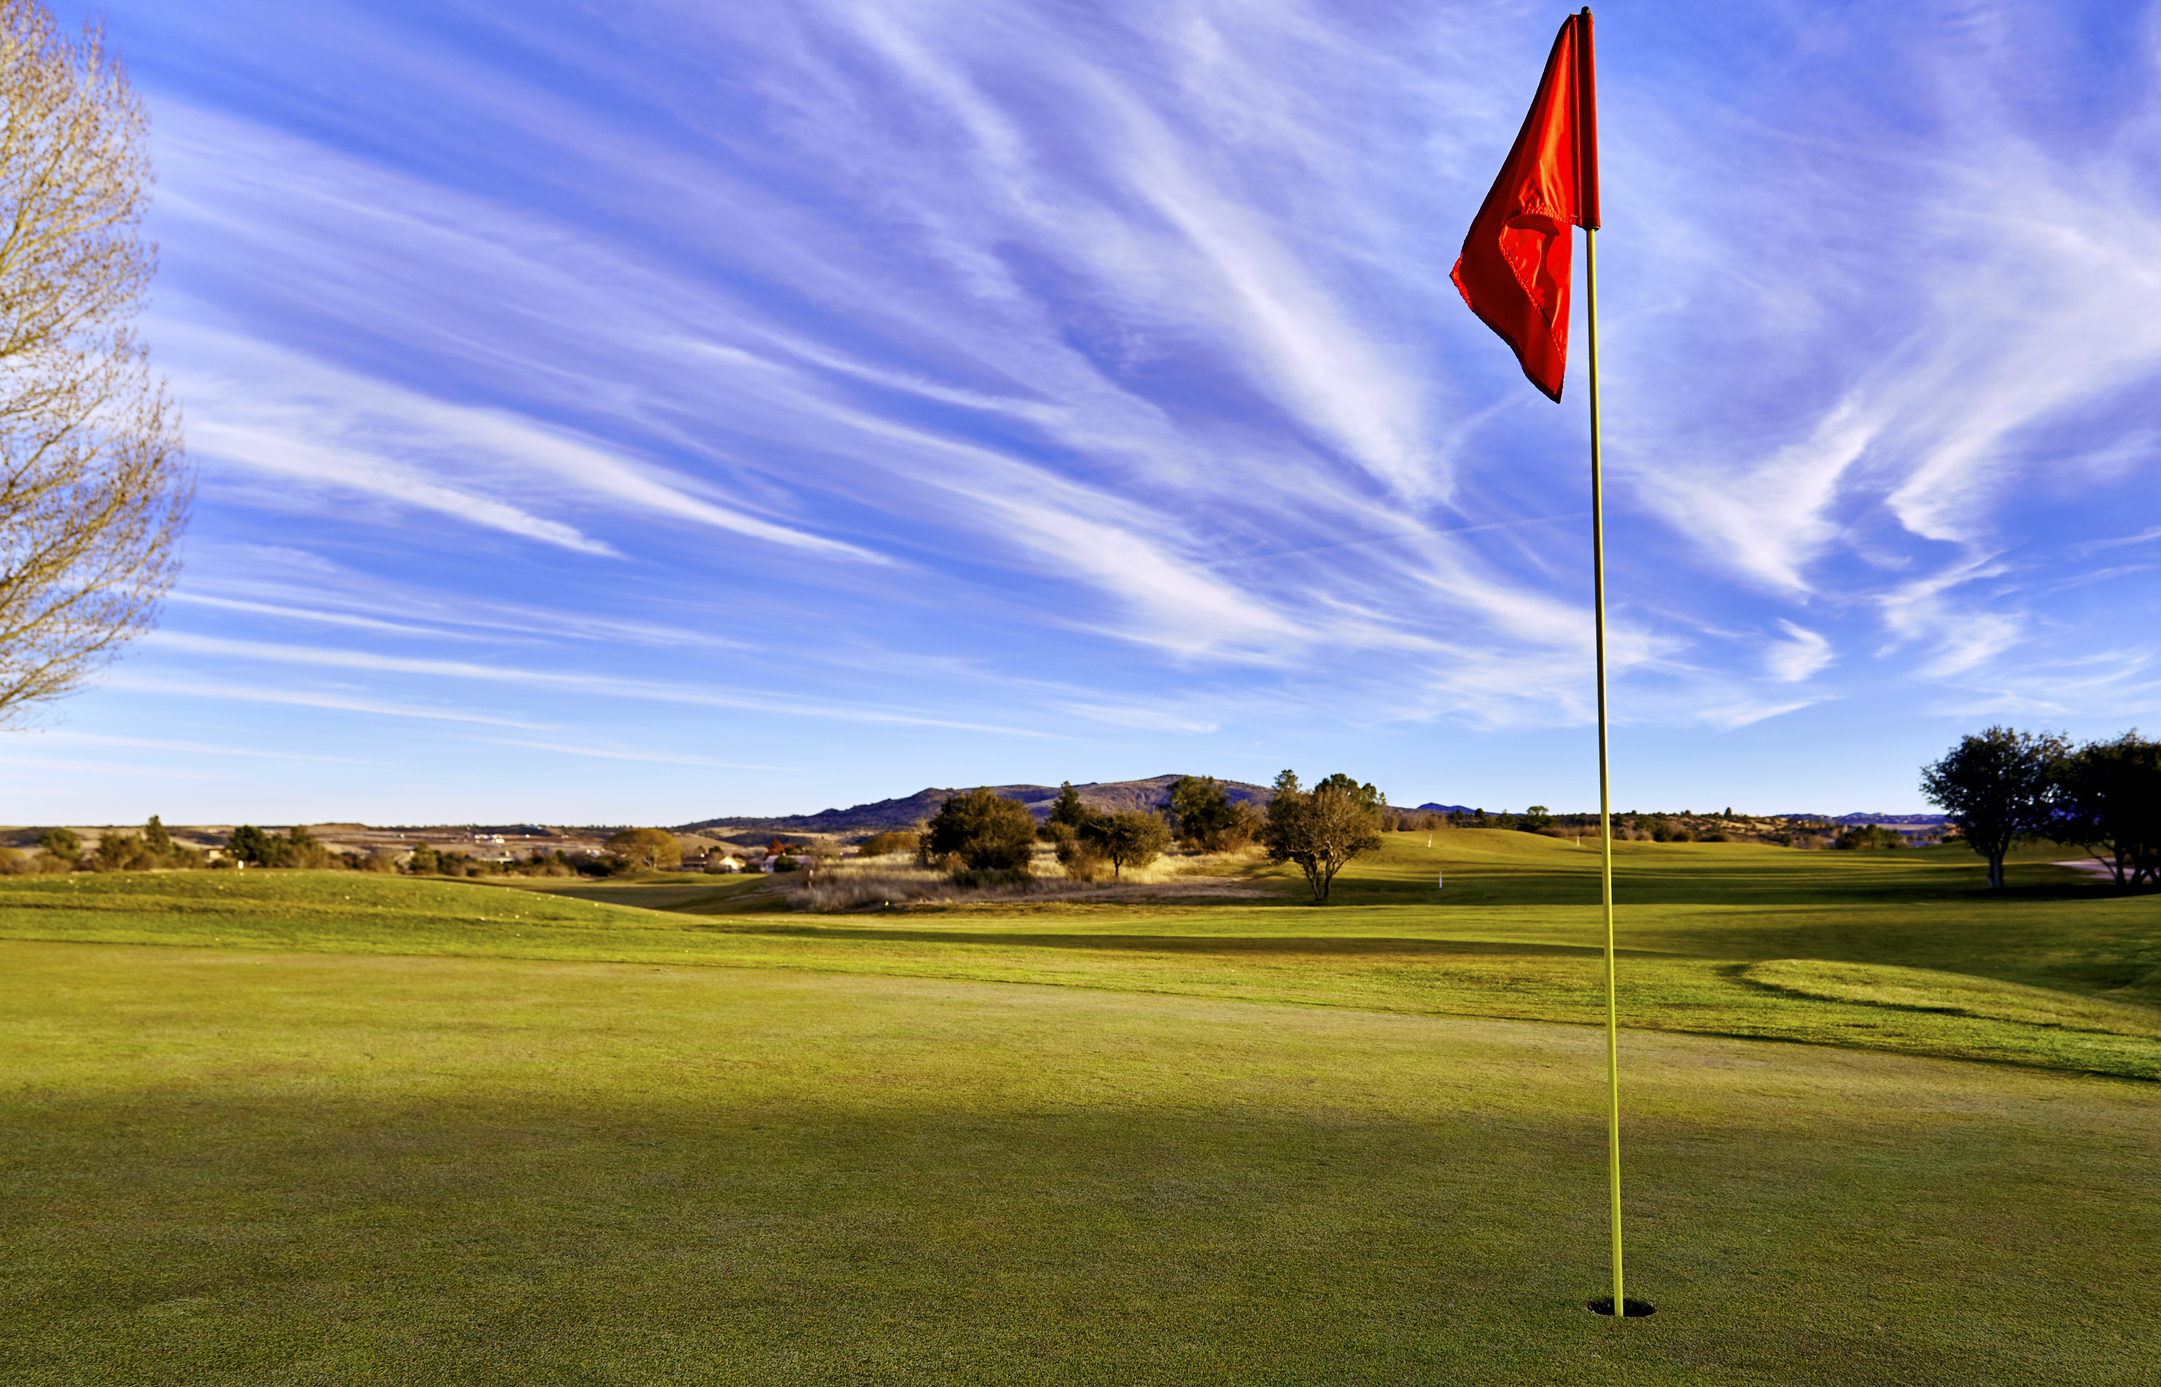 Red golf flag against green fairway background.